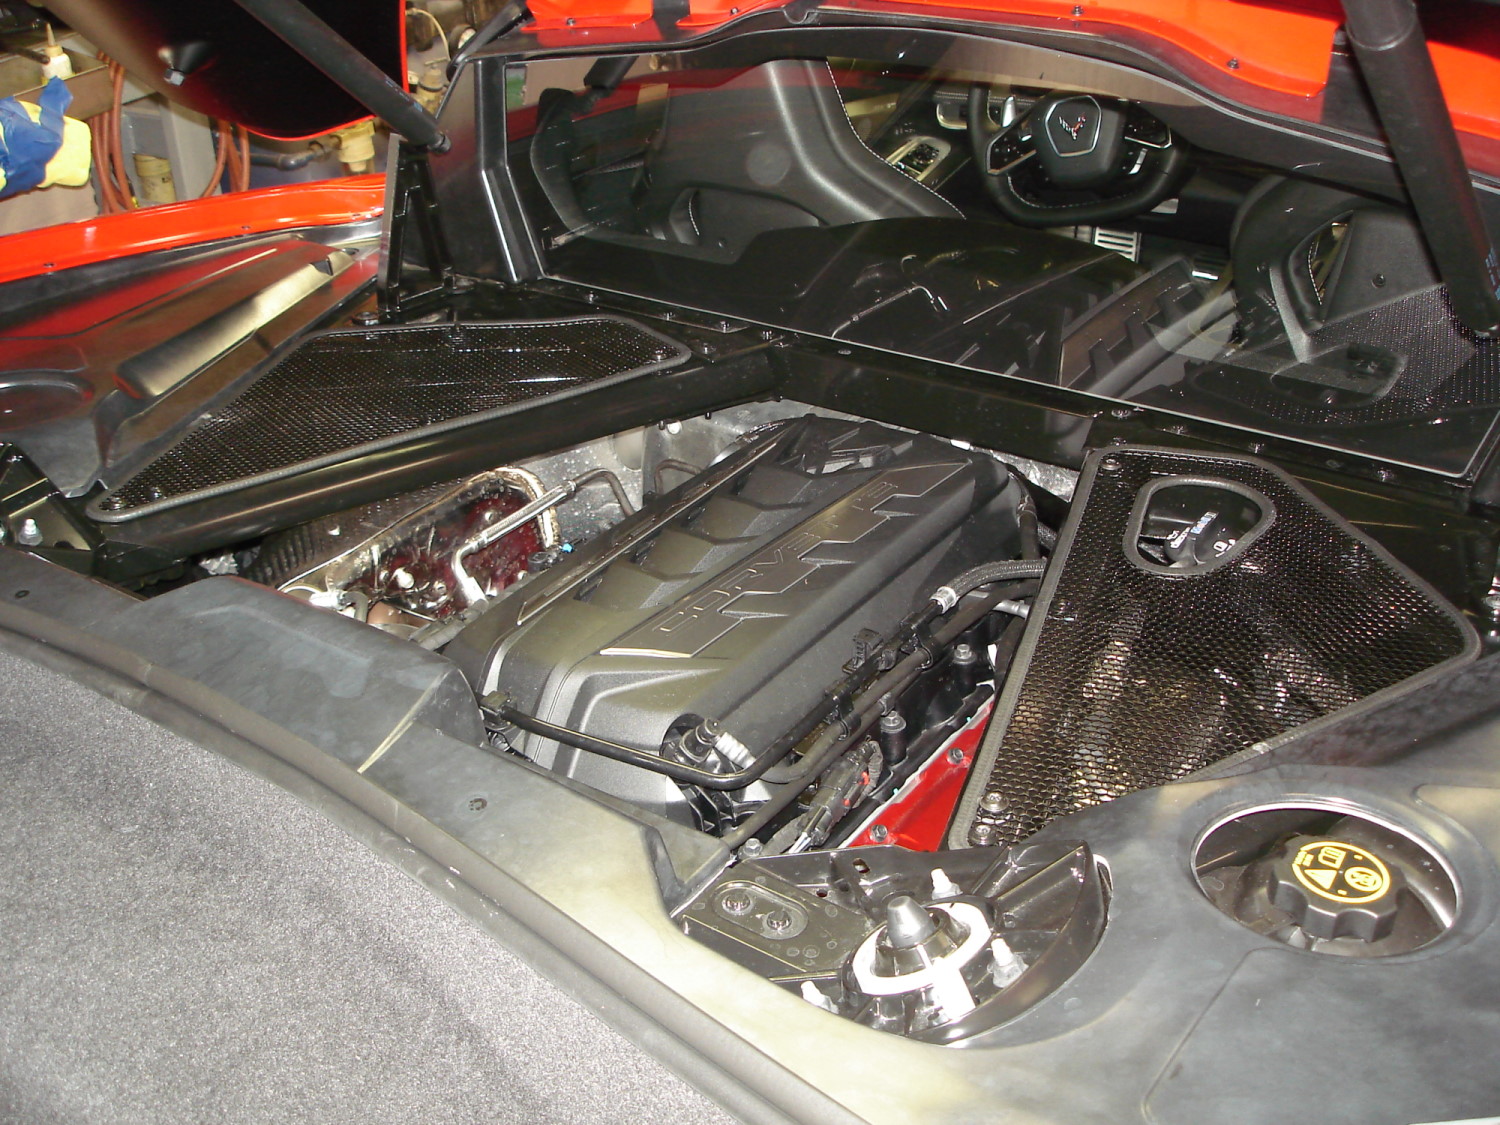 2020 - 2022 Chevy Corvette C8 Mesh Engine Covers #2